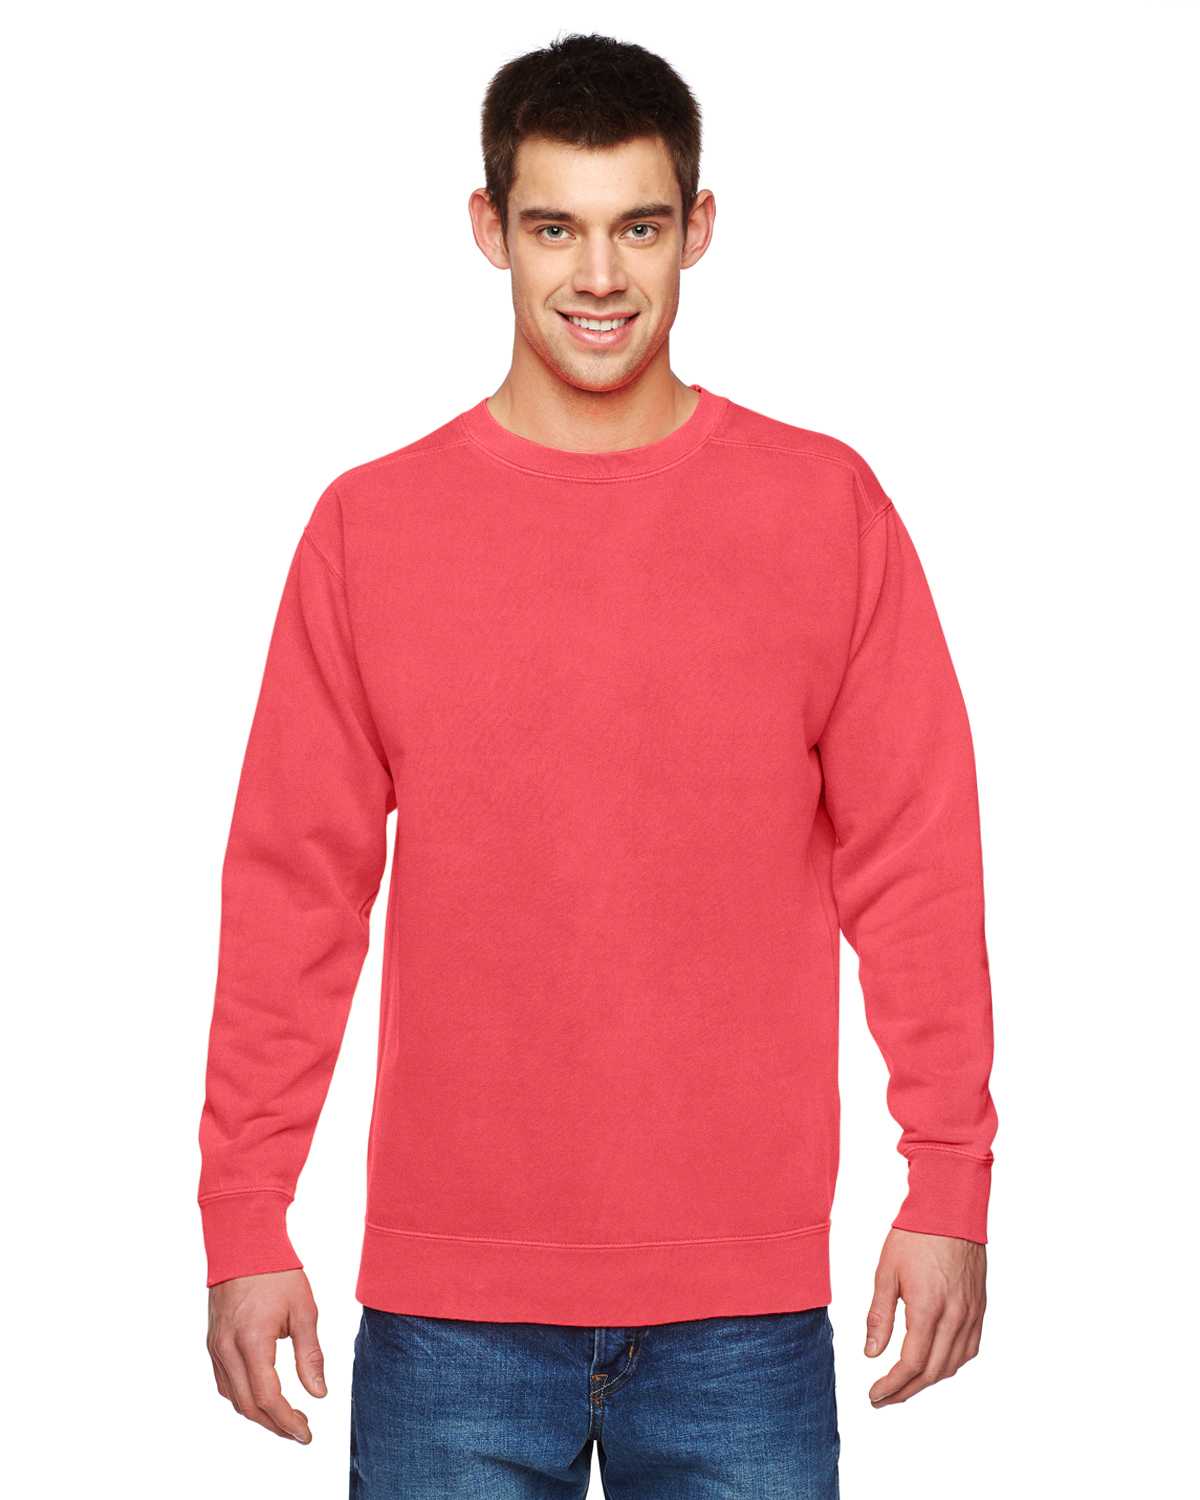 Comfort Colors 1566 Adult 9.5 oz. Crewneck Sweatshirt | ApparelChoice.com